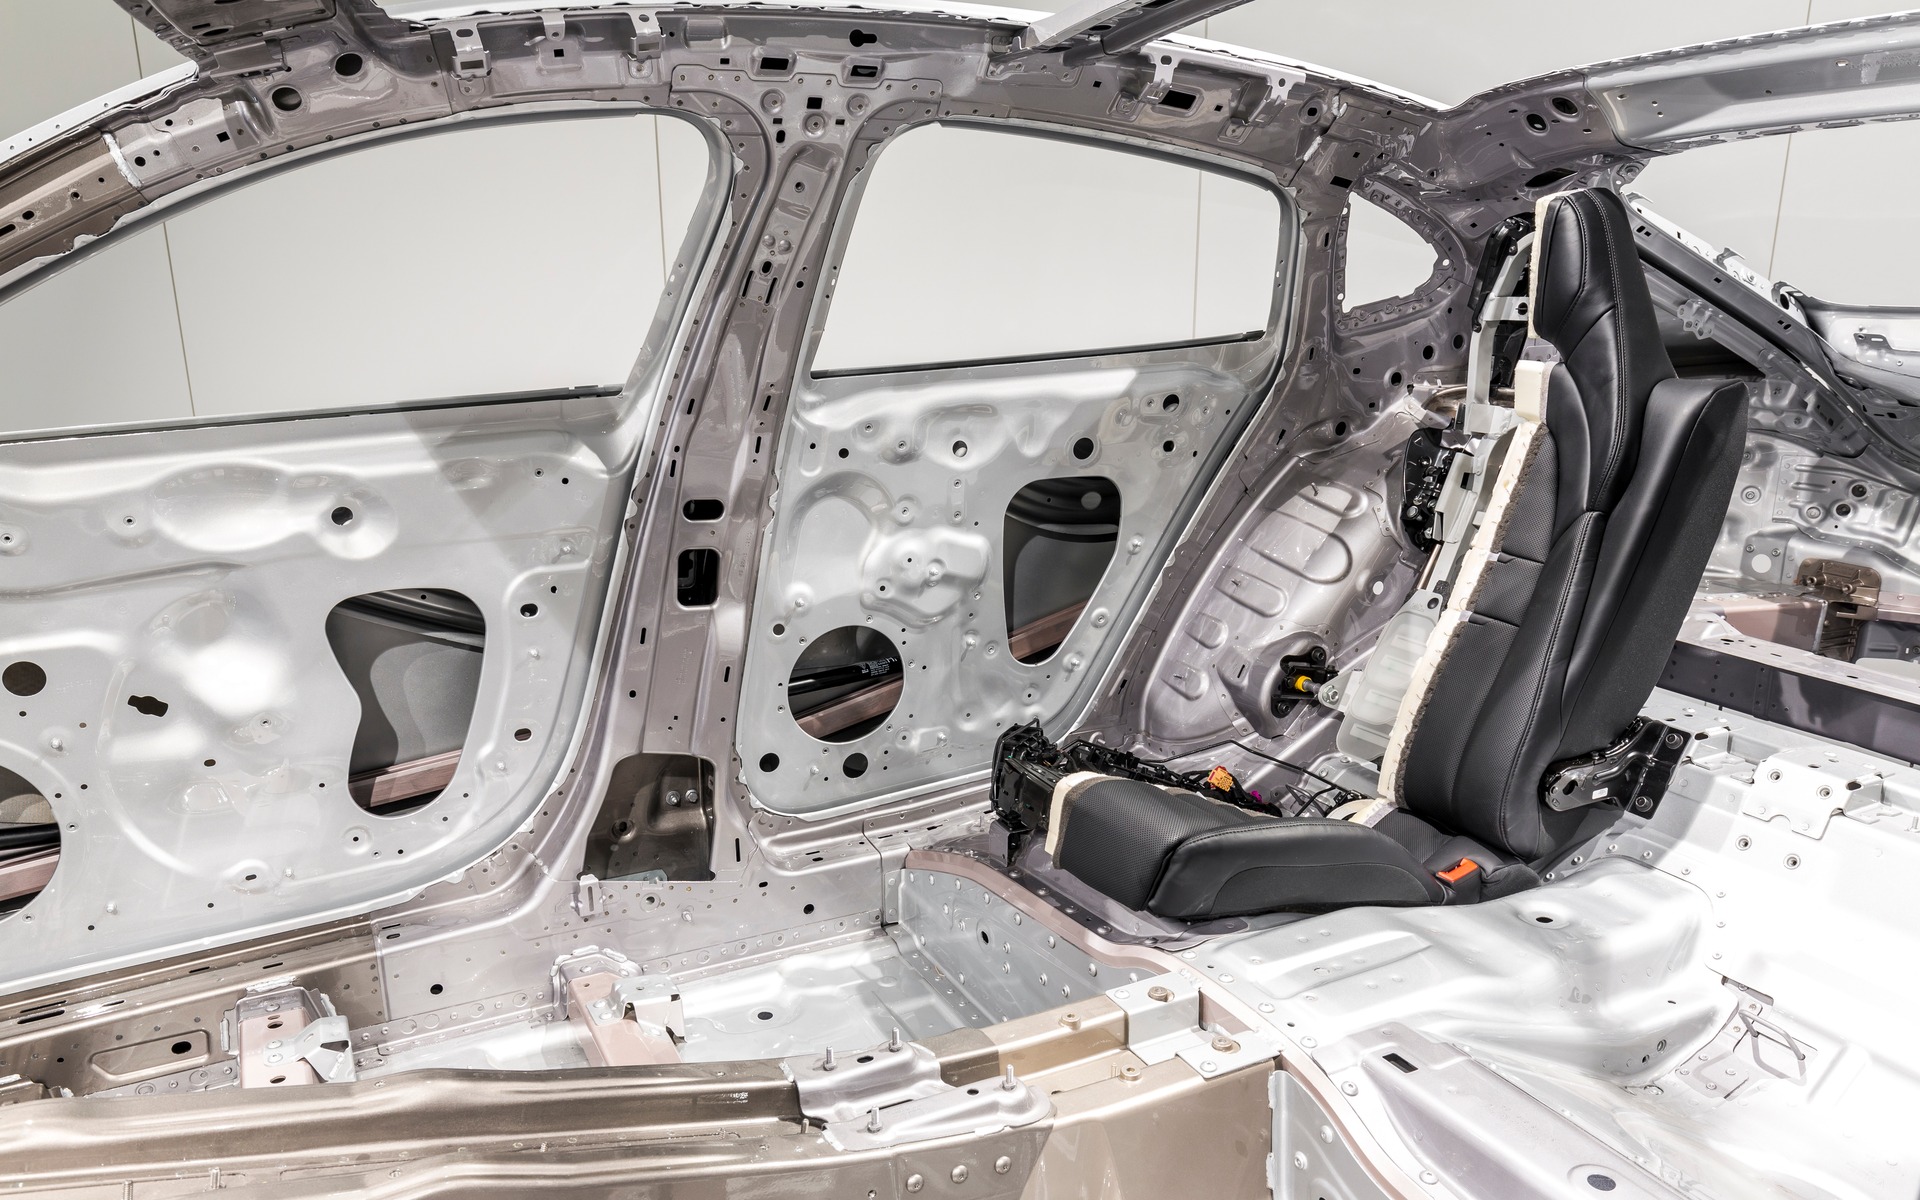 The 2017 Porsche Panamera's aluminum structure